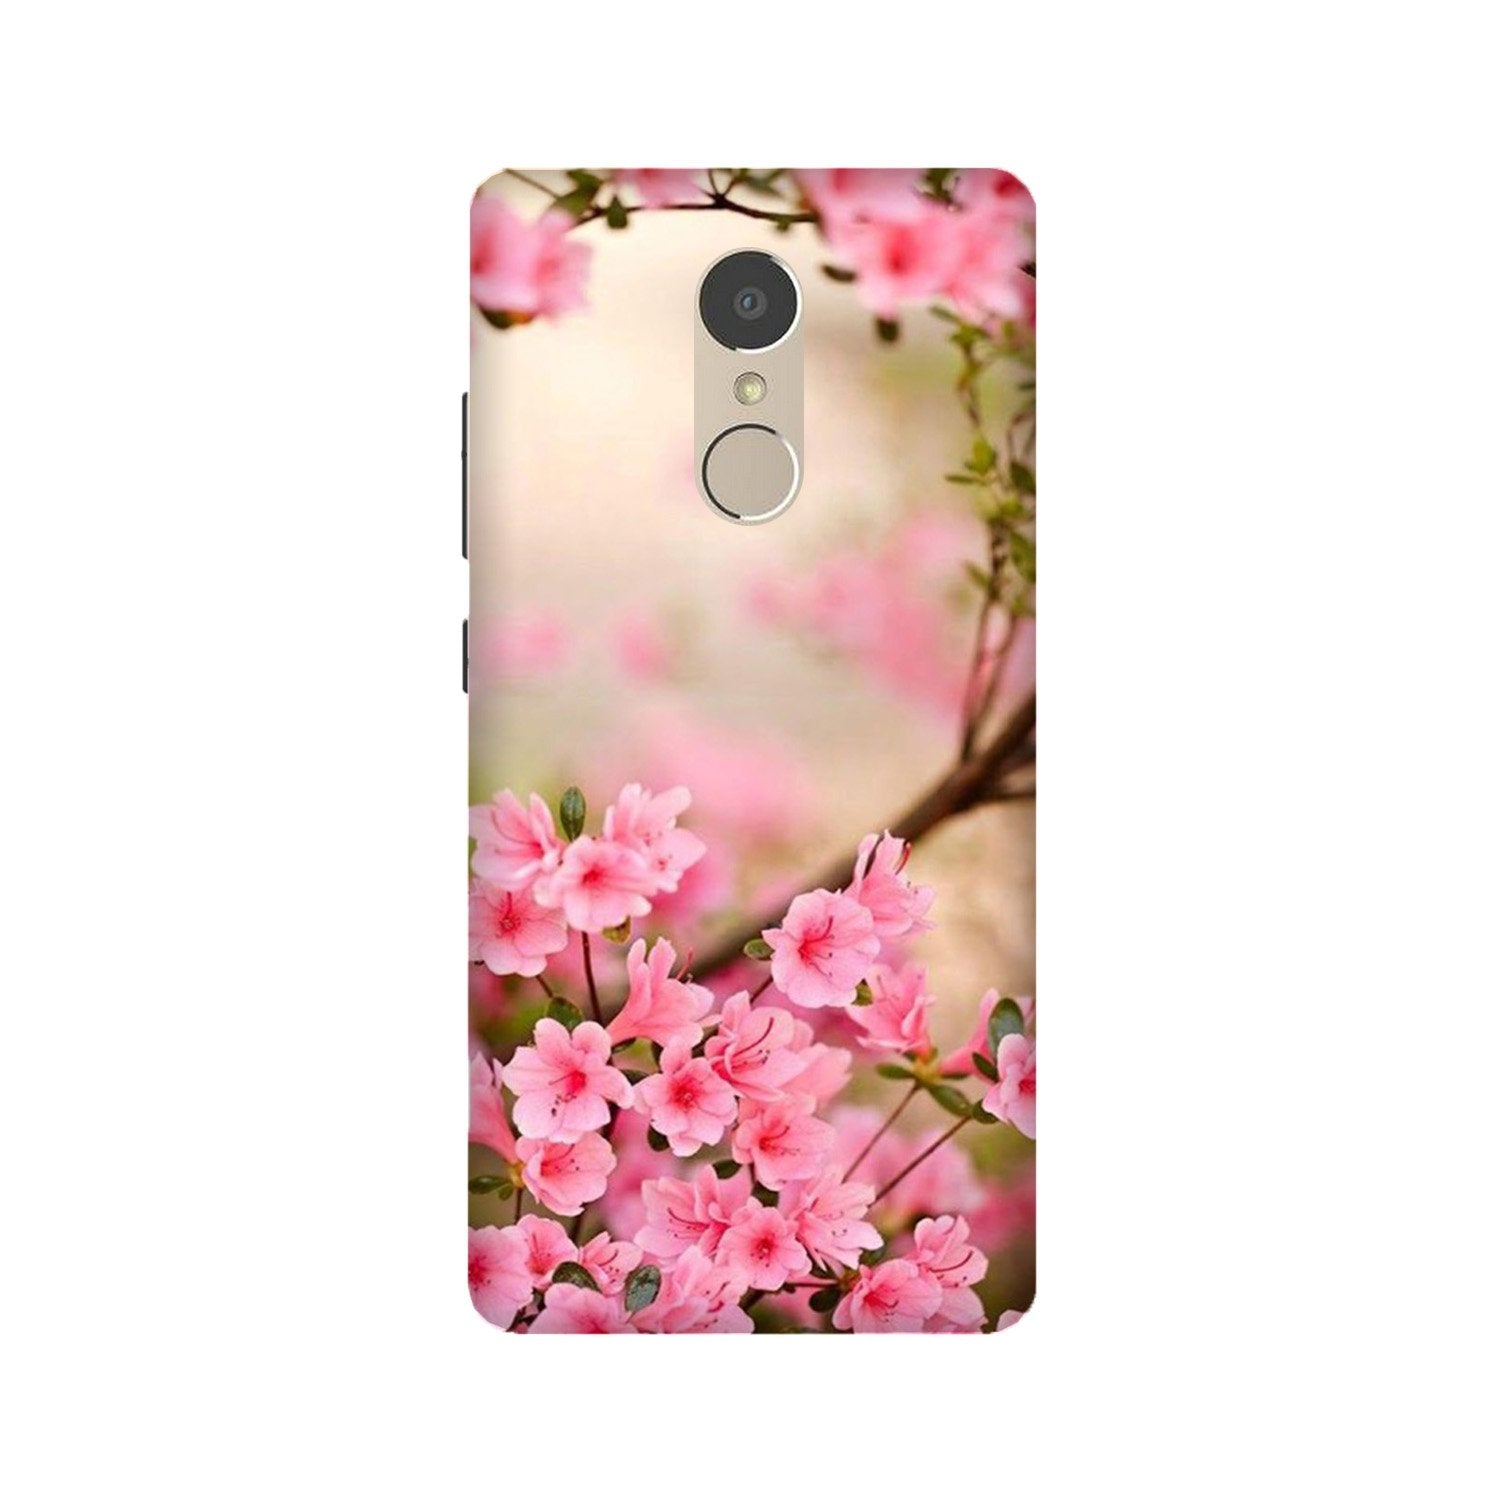 Pink flowers Case for Lenovo K6 Note